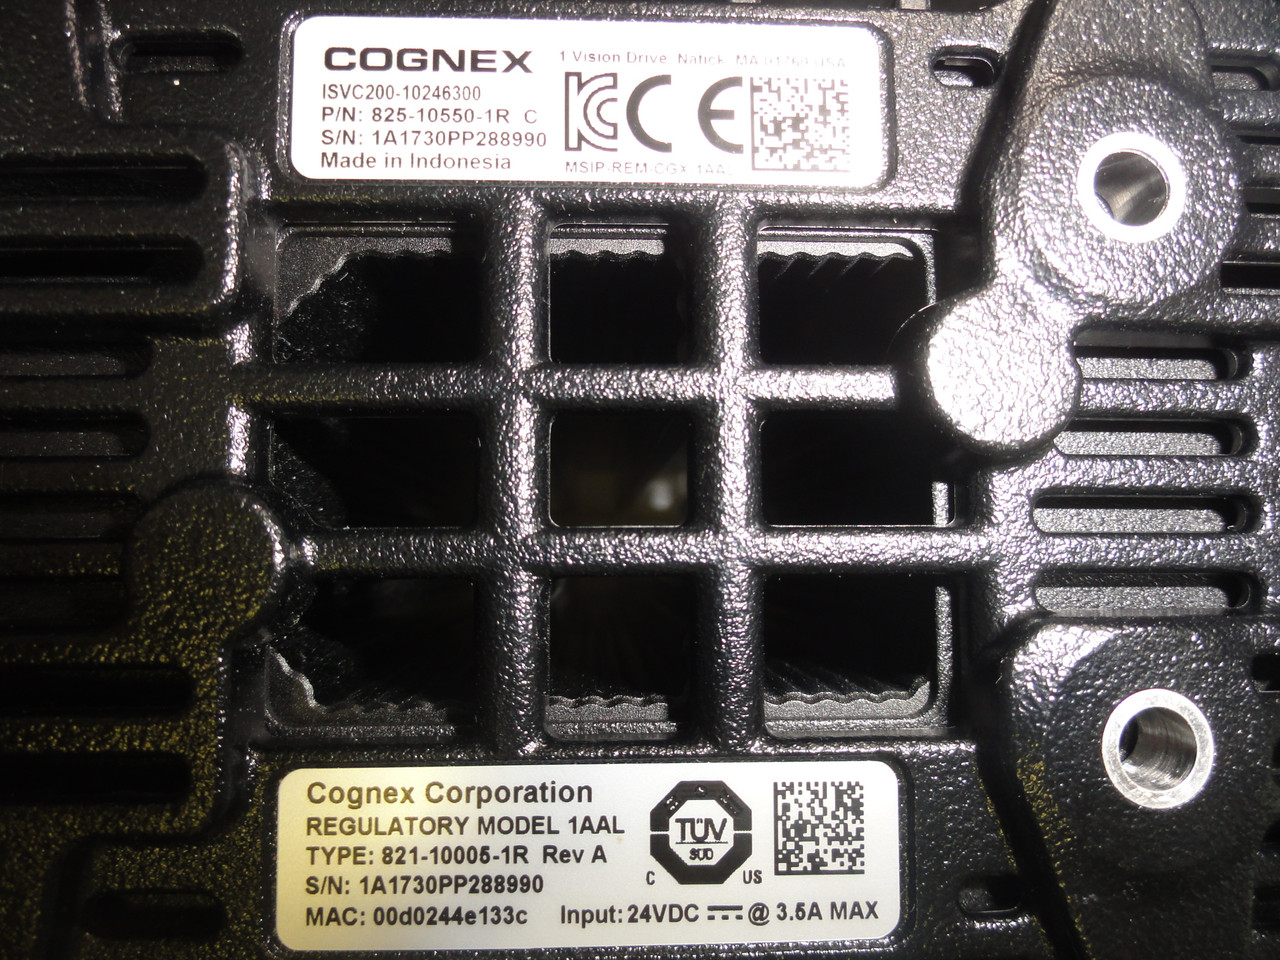 Cognex Regulatory Model 1AAL w/ Wiegmann Enclosure and Rhino Power Supply